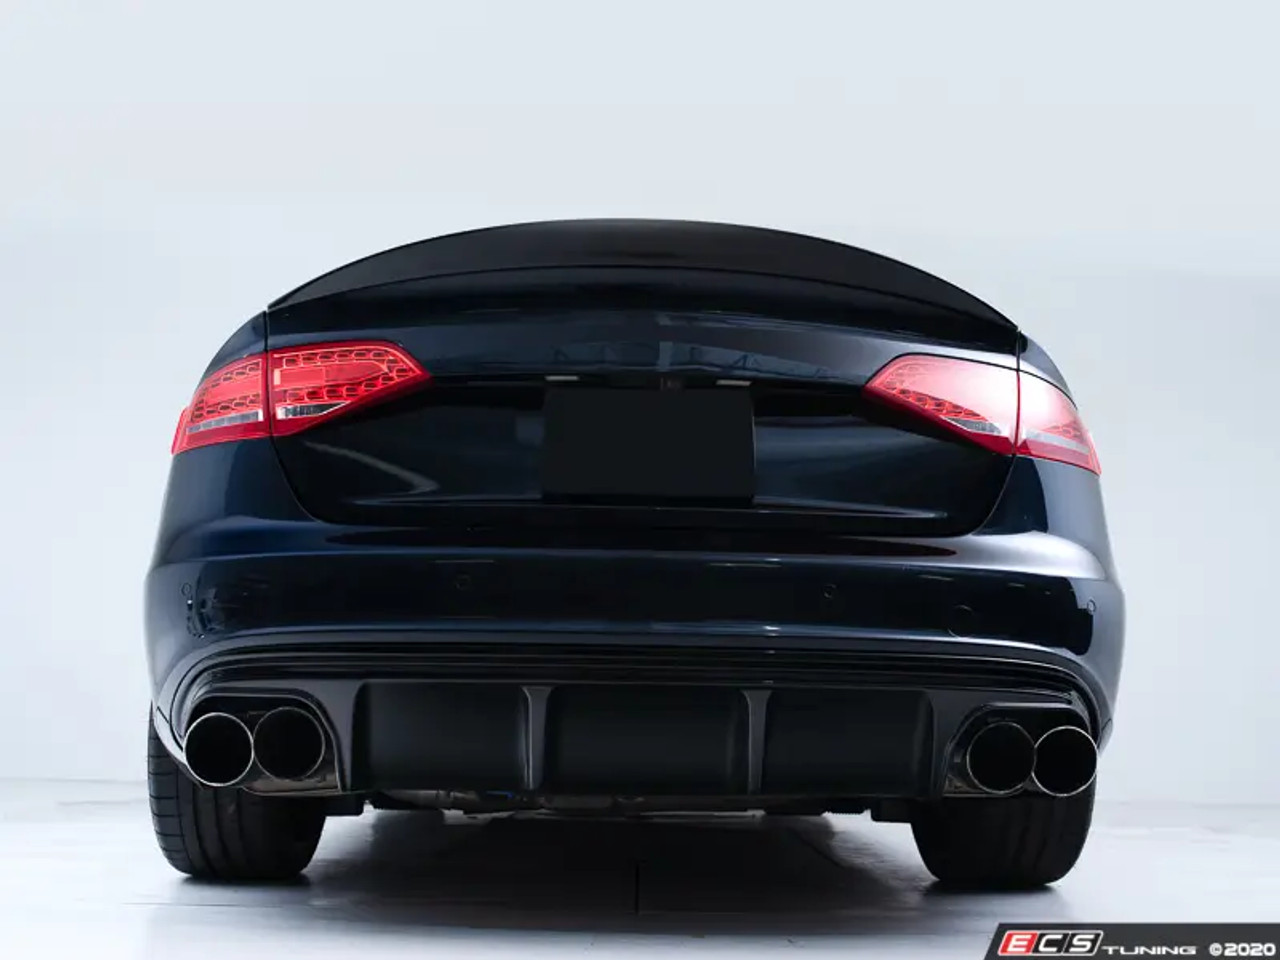 Audi B8 S4 / A4 S-Line Rear Diffuser - Gloss Black